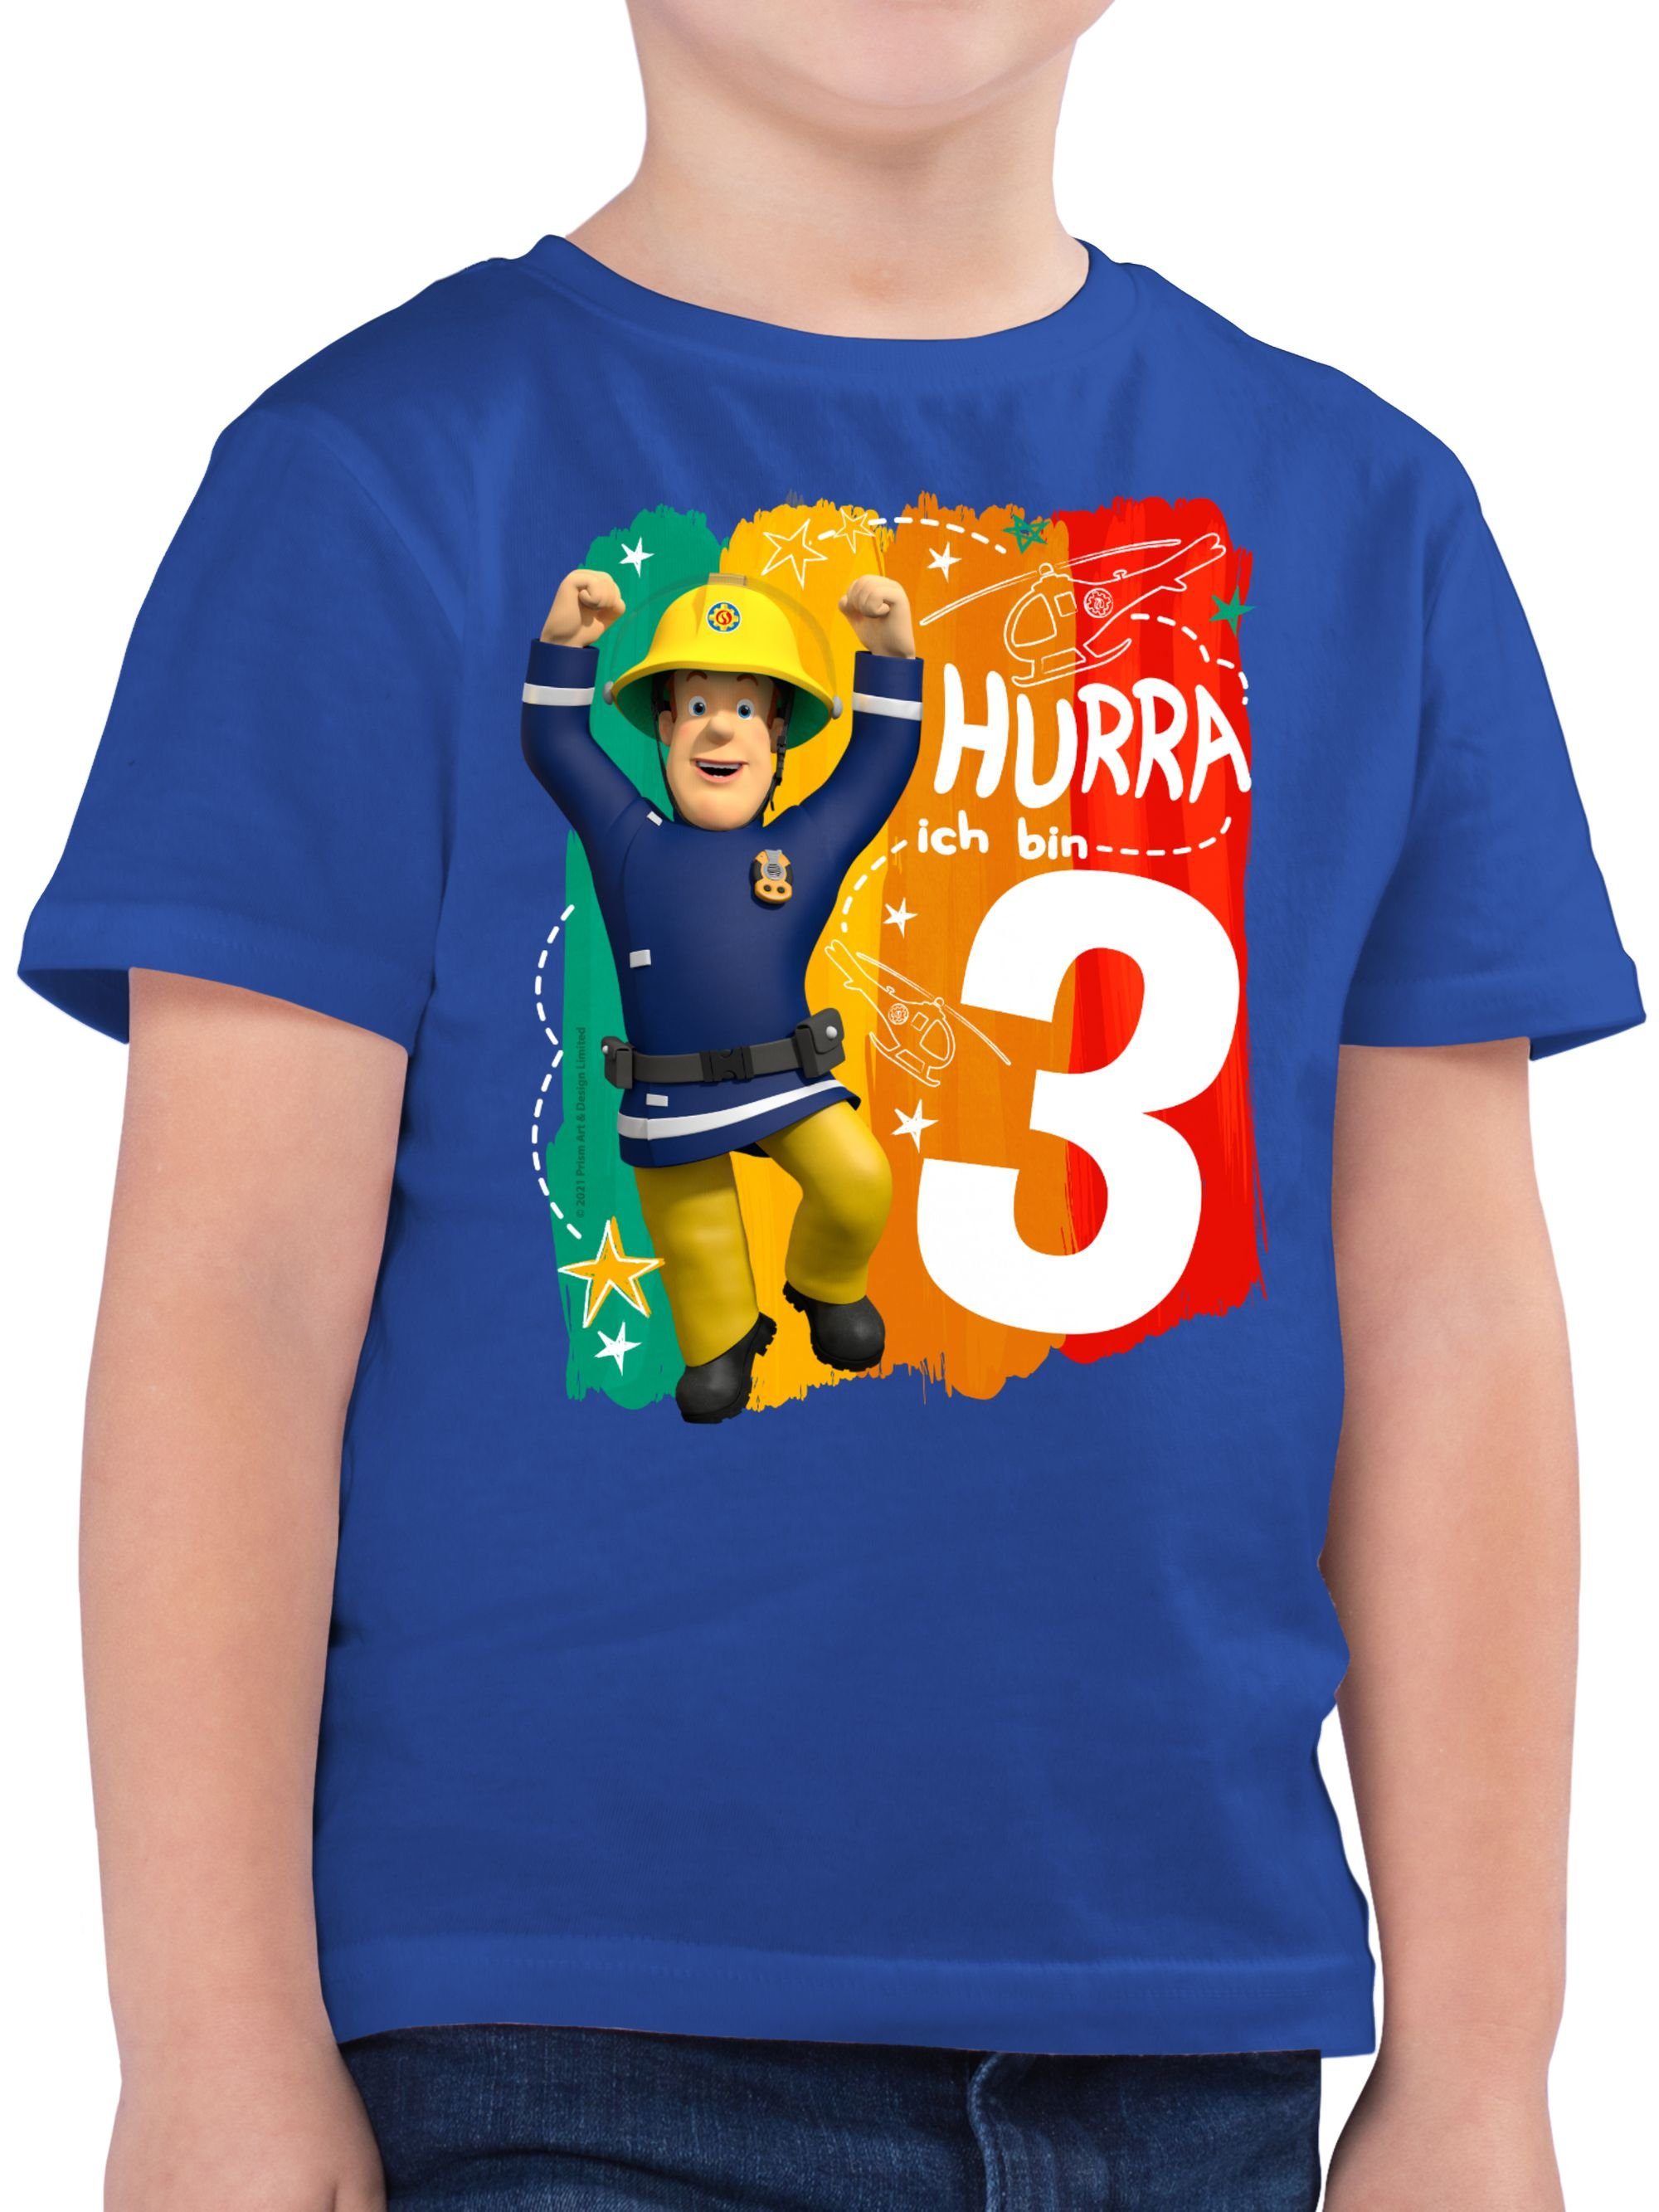 Shirtracer T-Shirt Hurra ich bin Drei - Sam - Feuerwehrmann Sam Jungen - Jungen Kinder T-Shirt t shirt mit 3 - sam cool - feuerwehr t-shirt - birthday tshirt 2 Royalblau